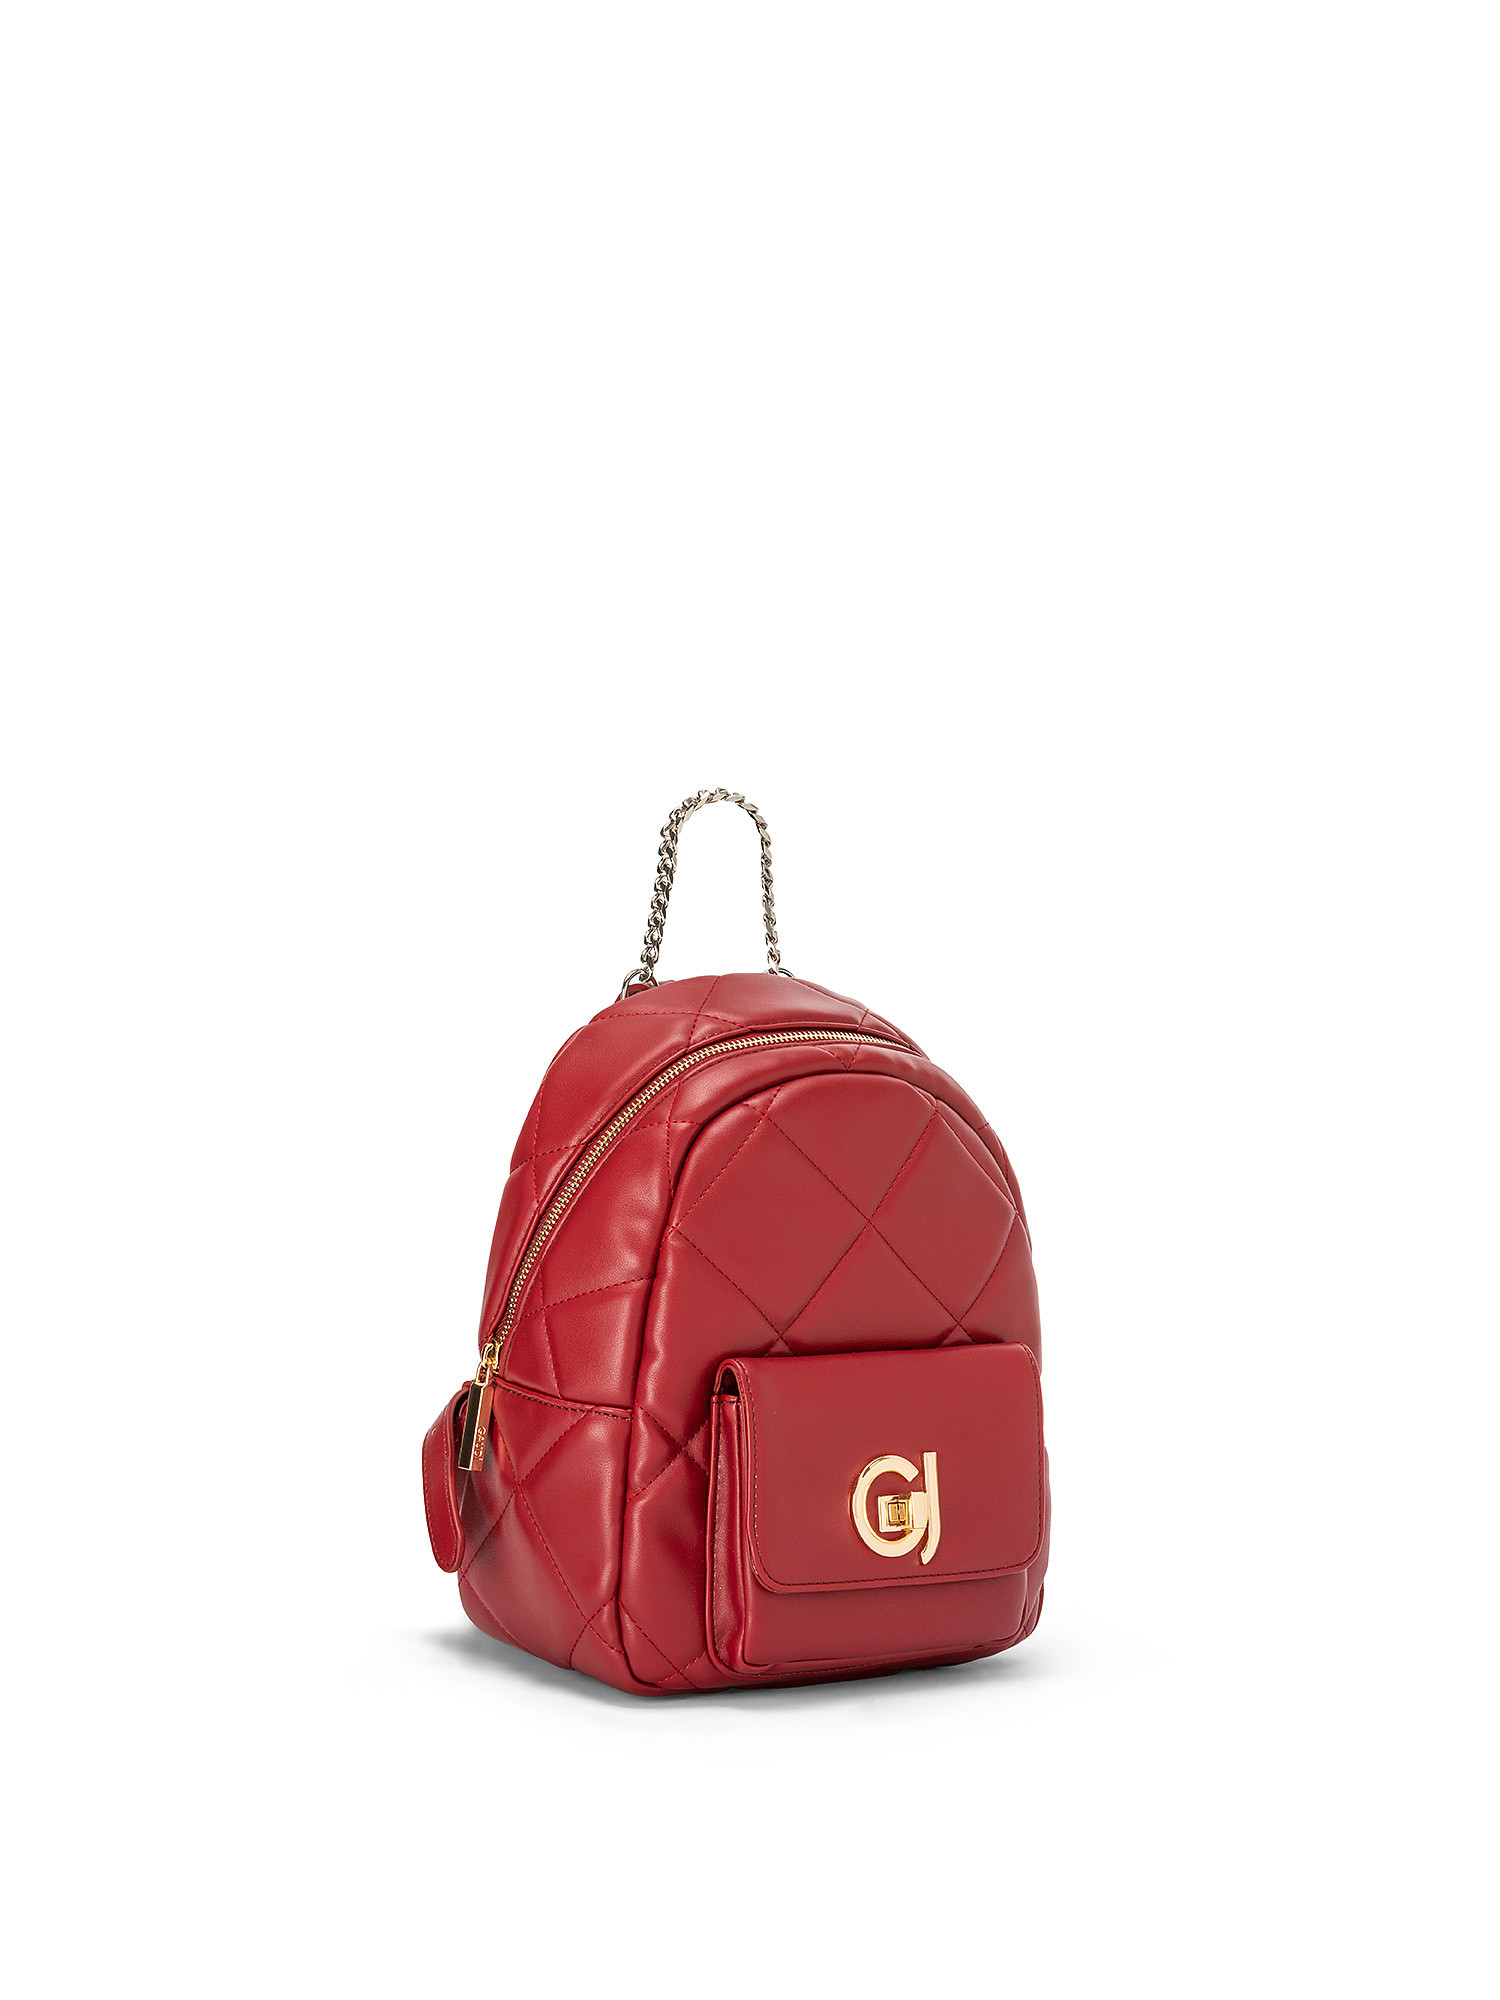 Gaudì - Moon backpack, Dark Red, large image number 1